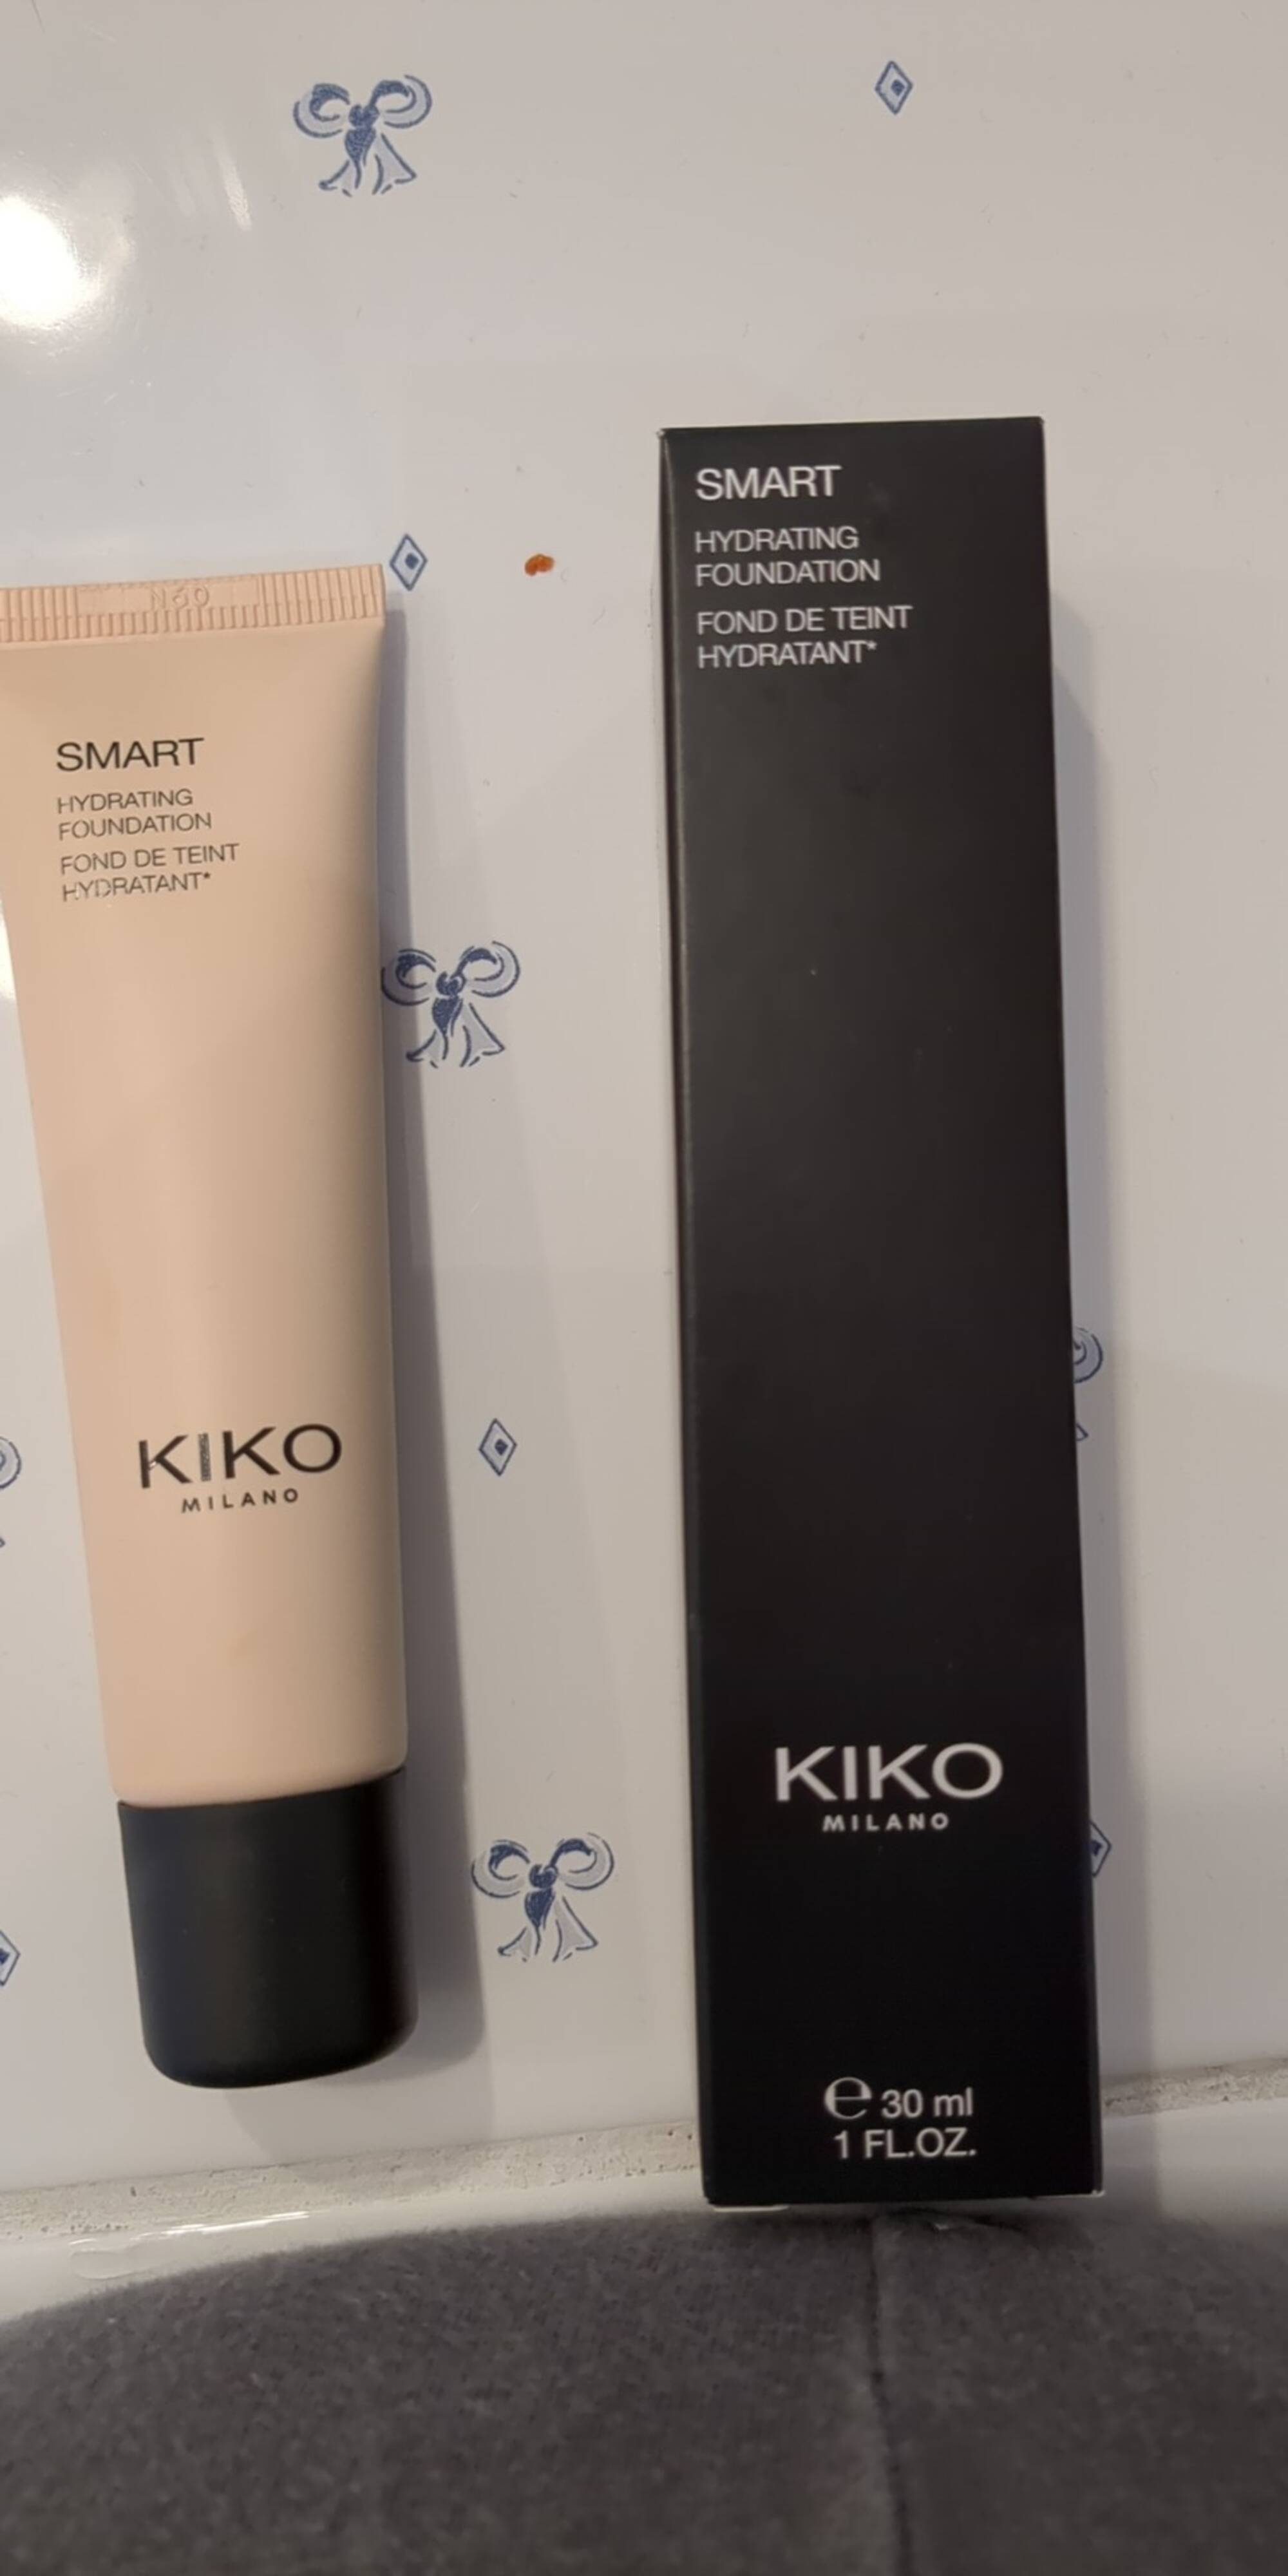 KIKO - Smart - Fond de teint hydratant